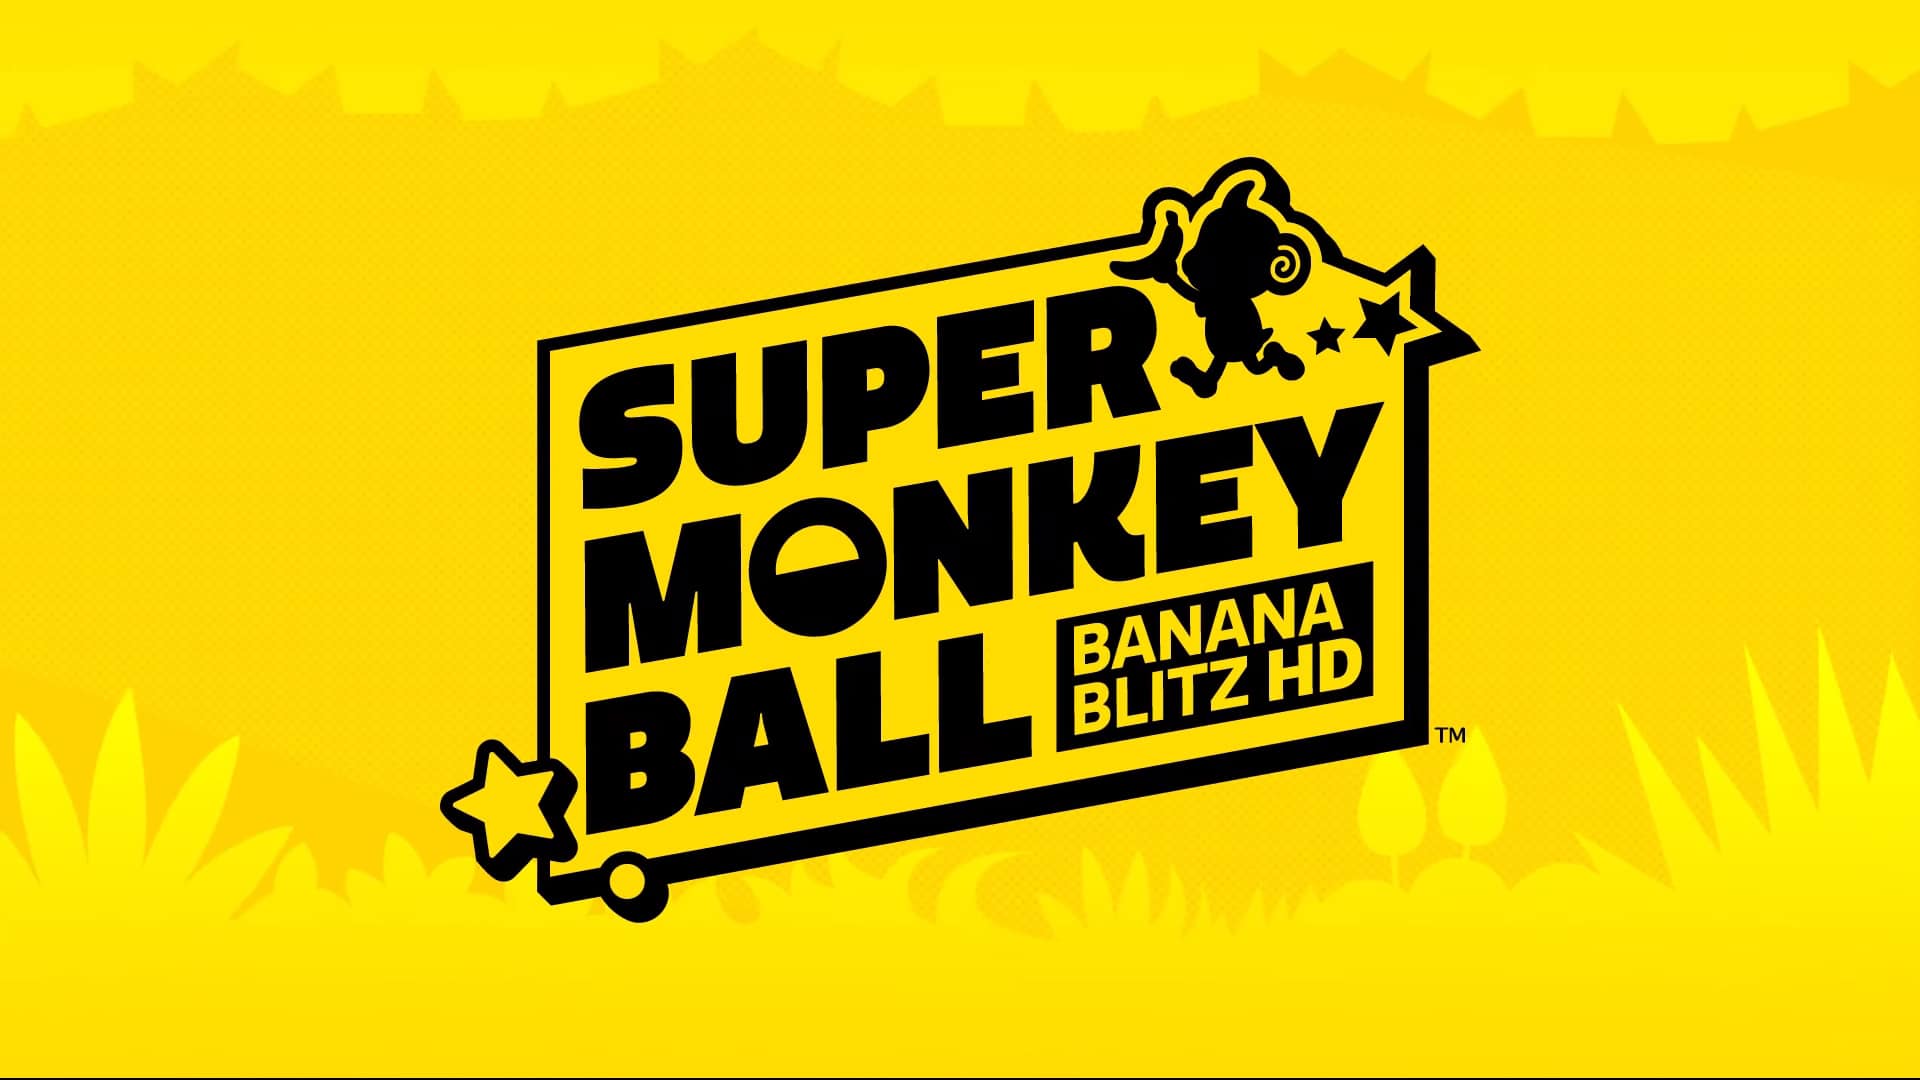 Super monkey ball banana blitz hd